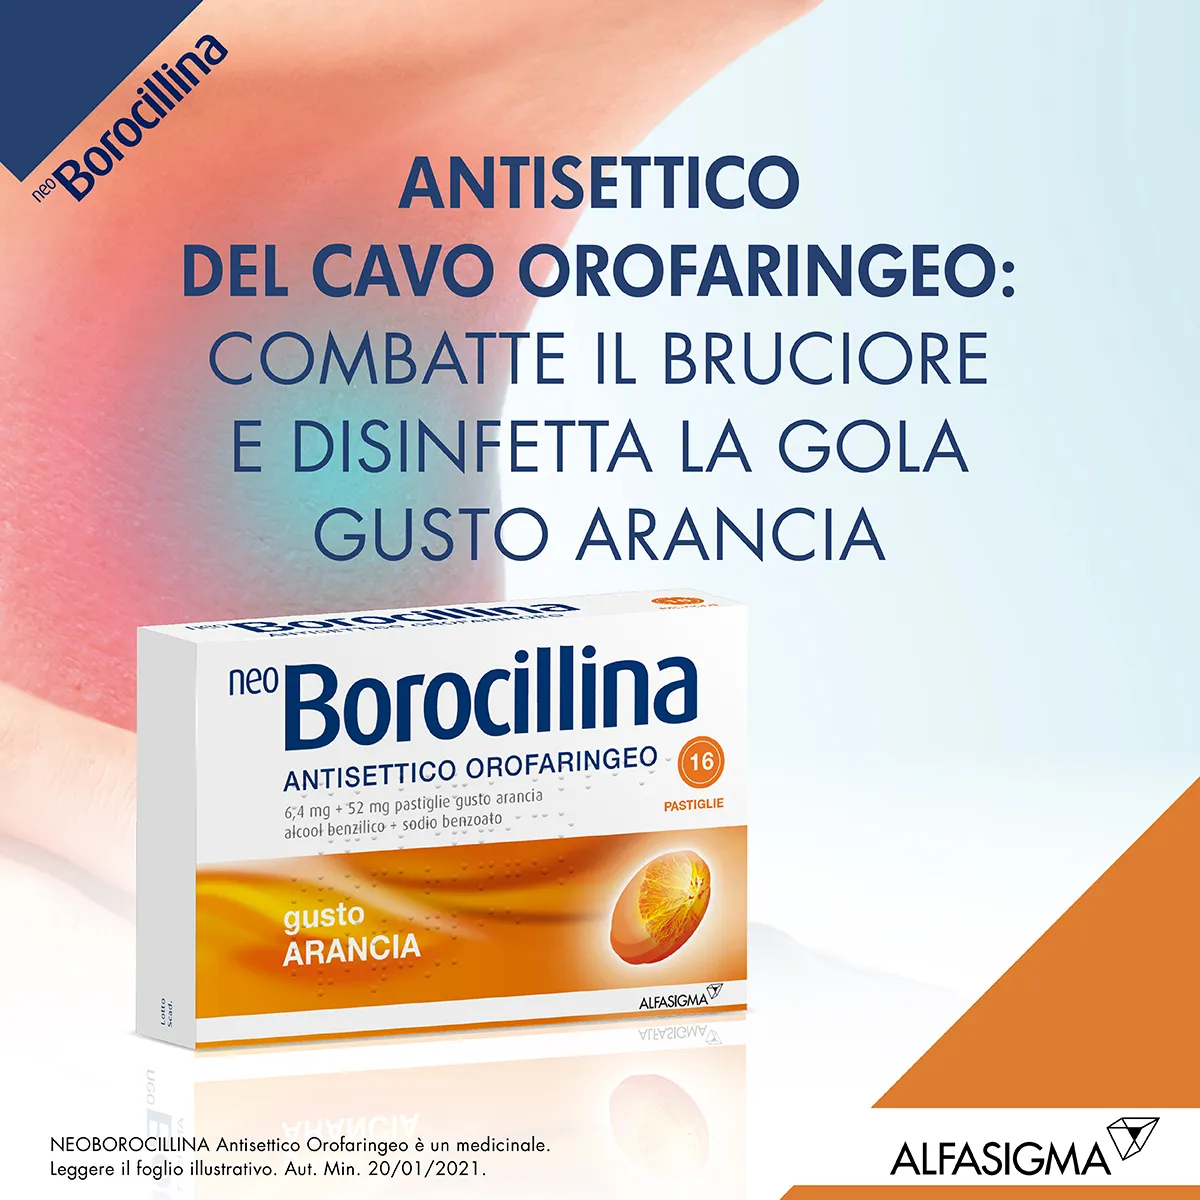 Neo Borocillina Antisettico Orofaringeo 6,4mg + 52mg Arancia 16 Pastiglie 